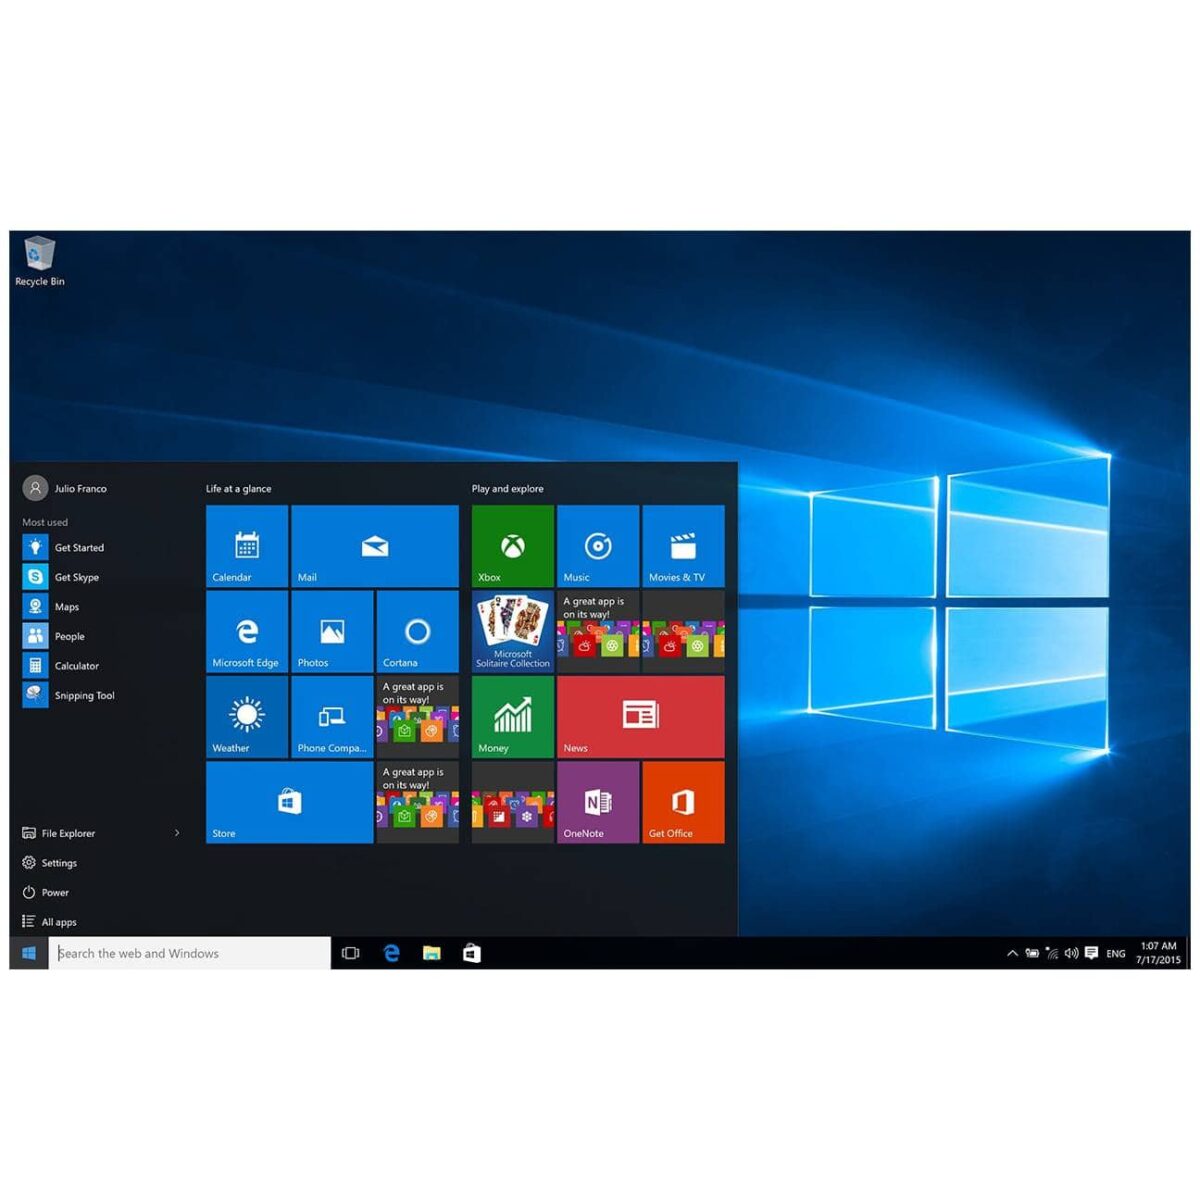 Windows 10 Features 1